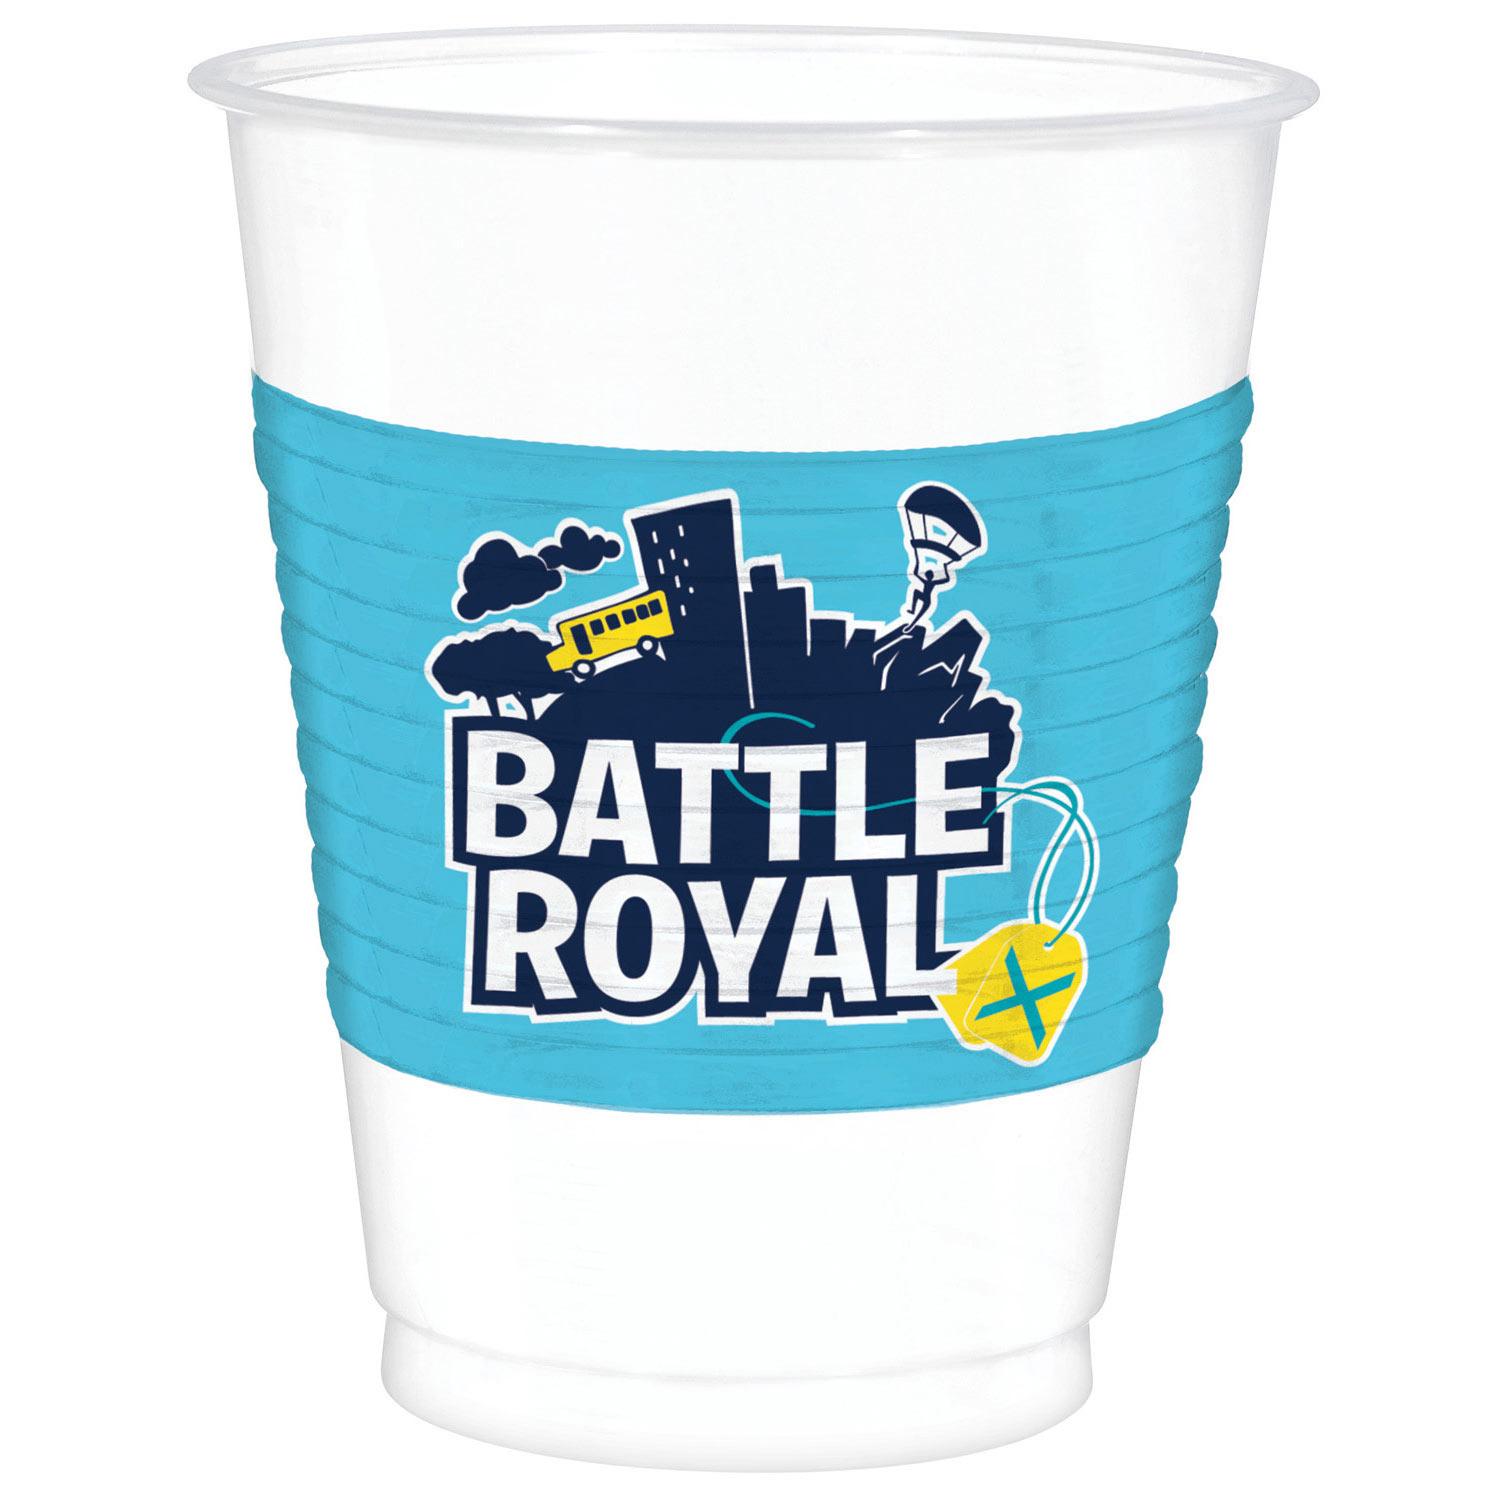 Battle Royal Plastic Cups 16oz, 8pcs Printed Tableware - Party Centre